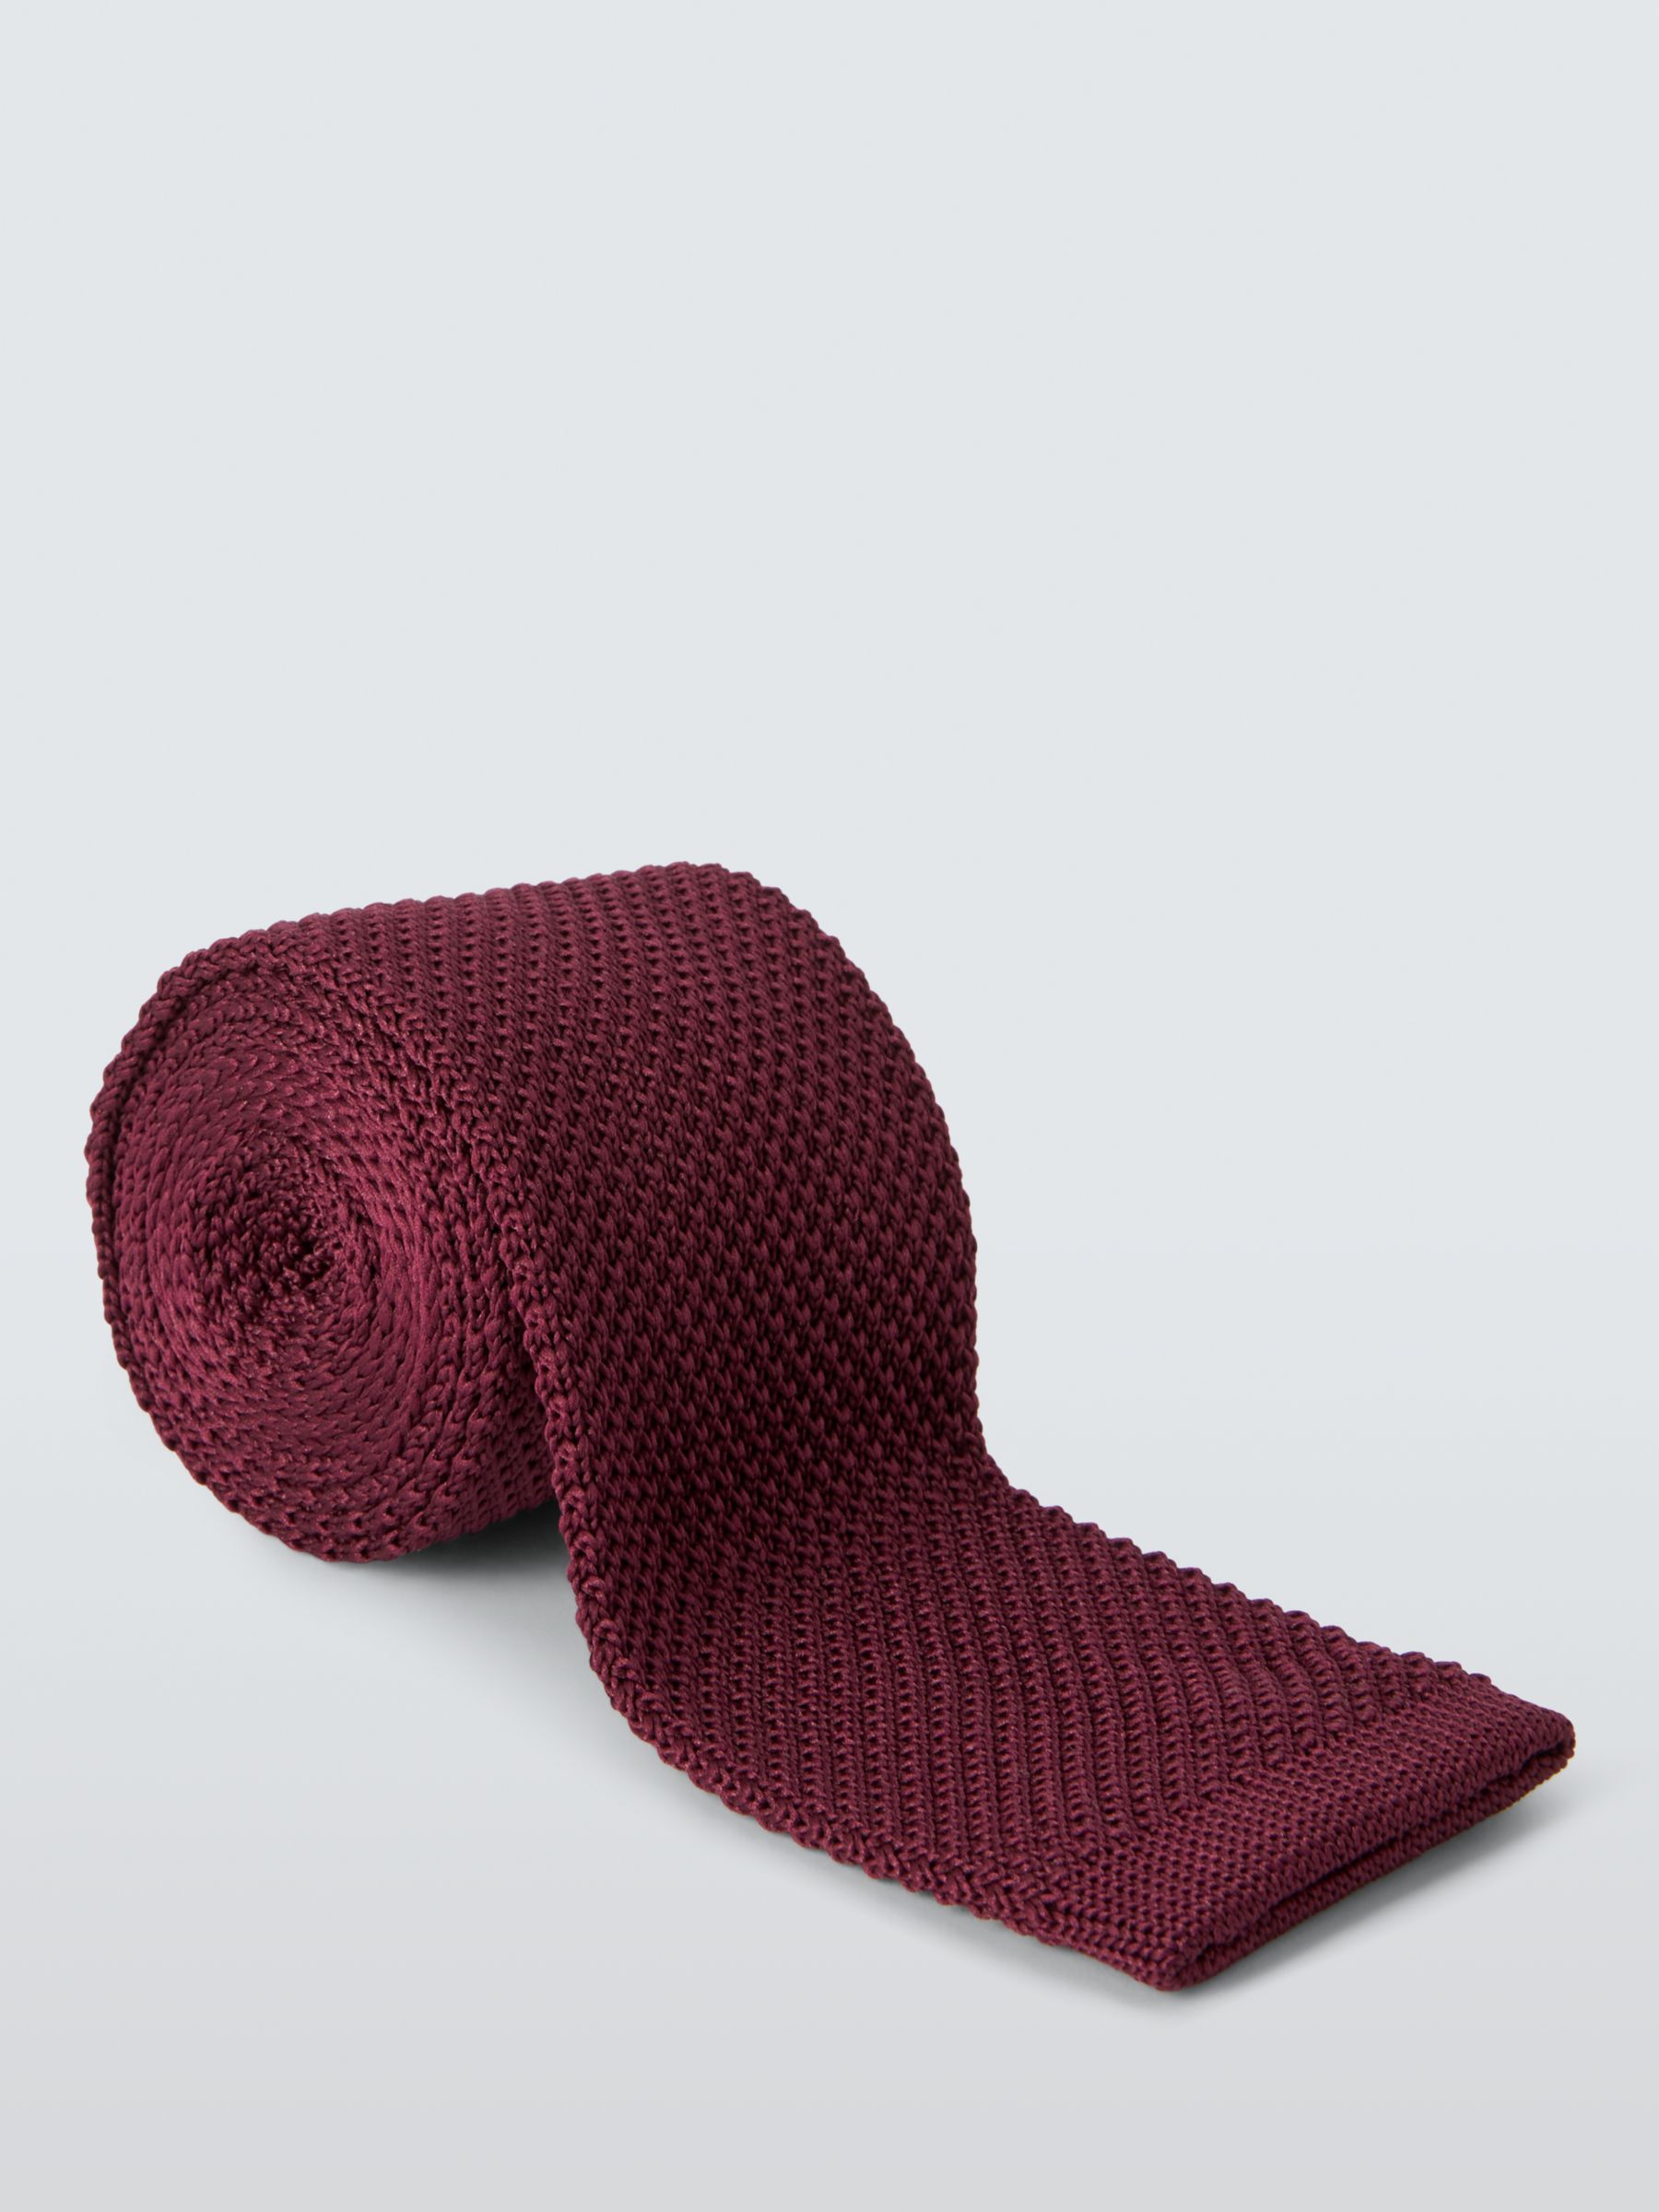 Buy John Lewis Knitted Tie Online at johnlewis.com